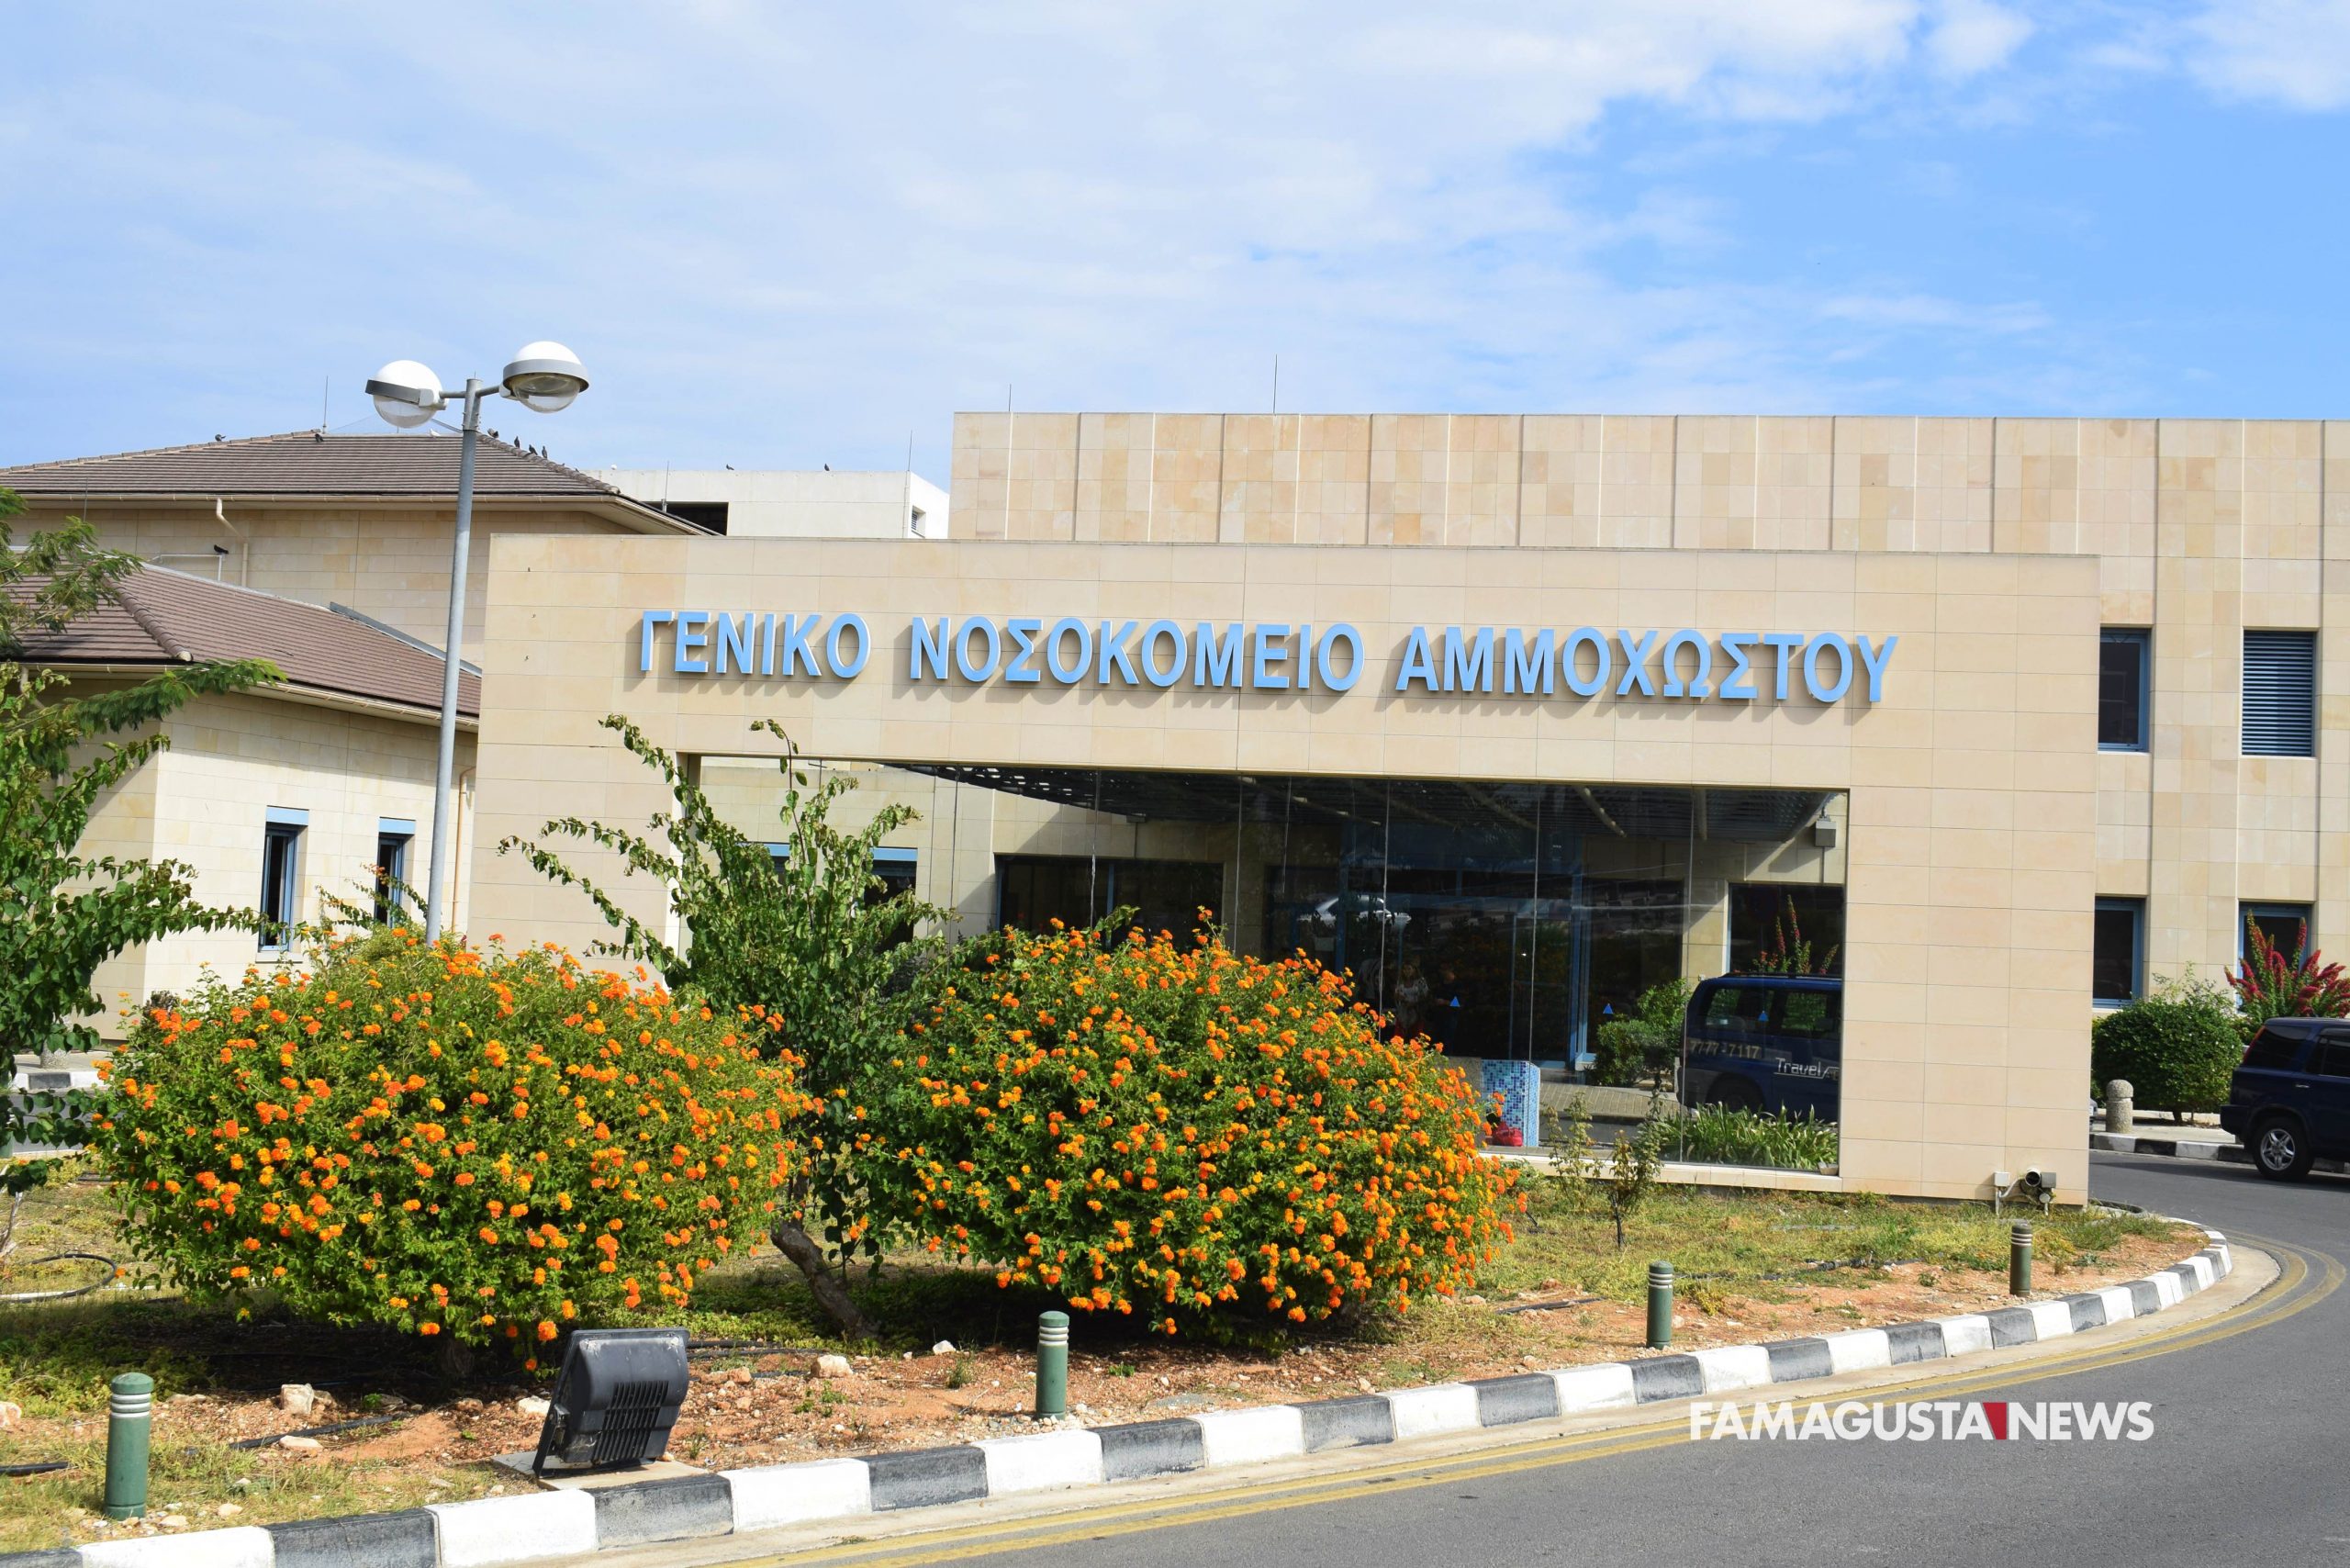 DSC 3546 scaled Famagusta General Hospital